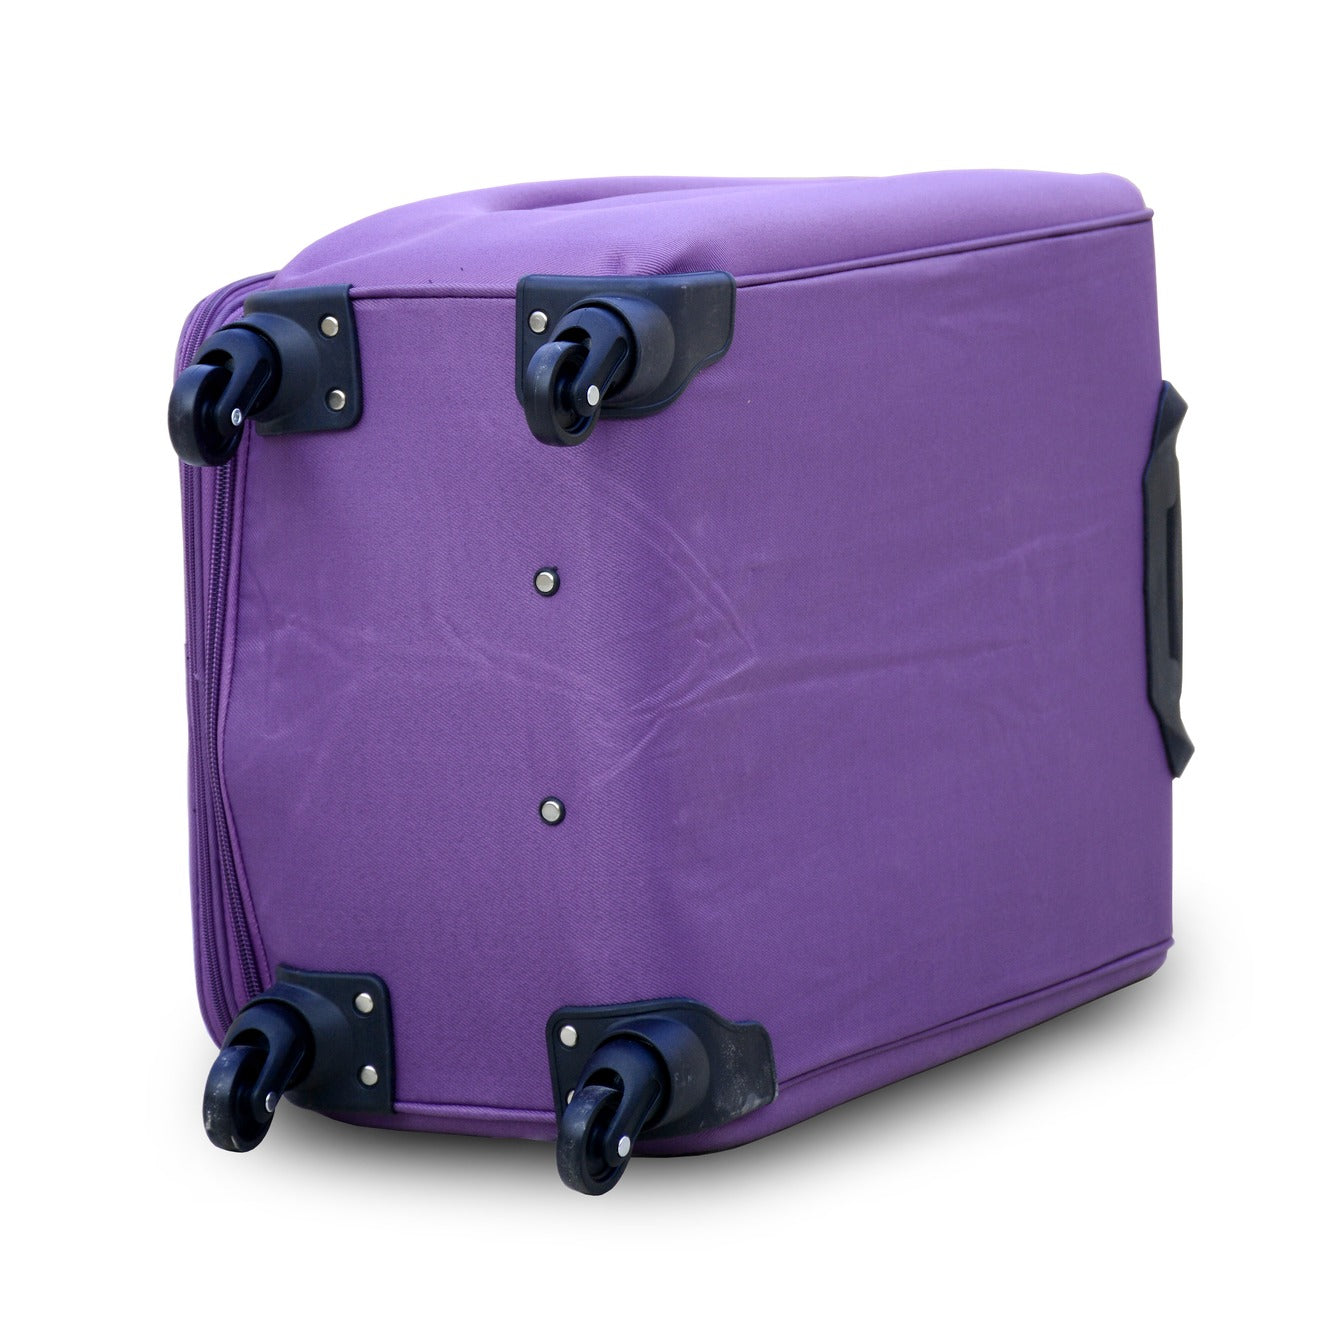 28" Purple Colour SJ JIAN 4 Wheel Luggage Lightweight Soft Material Trolley Bag